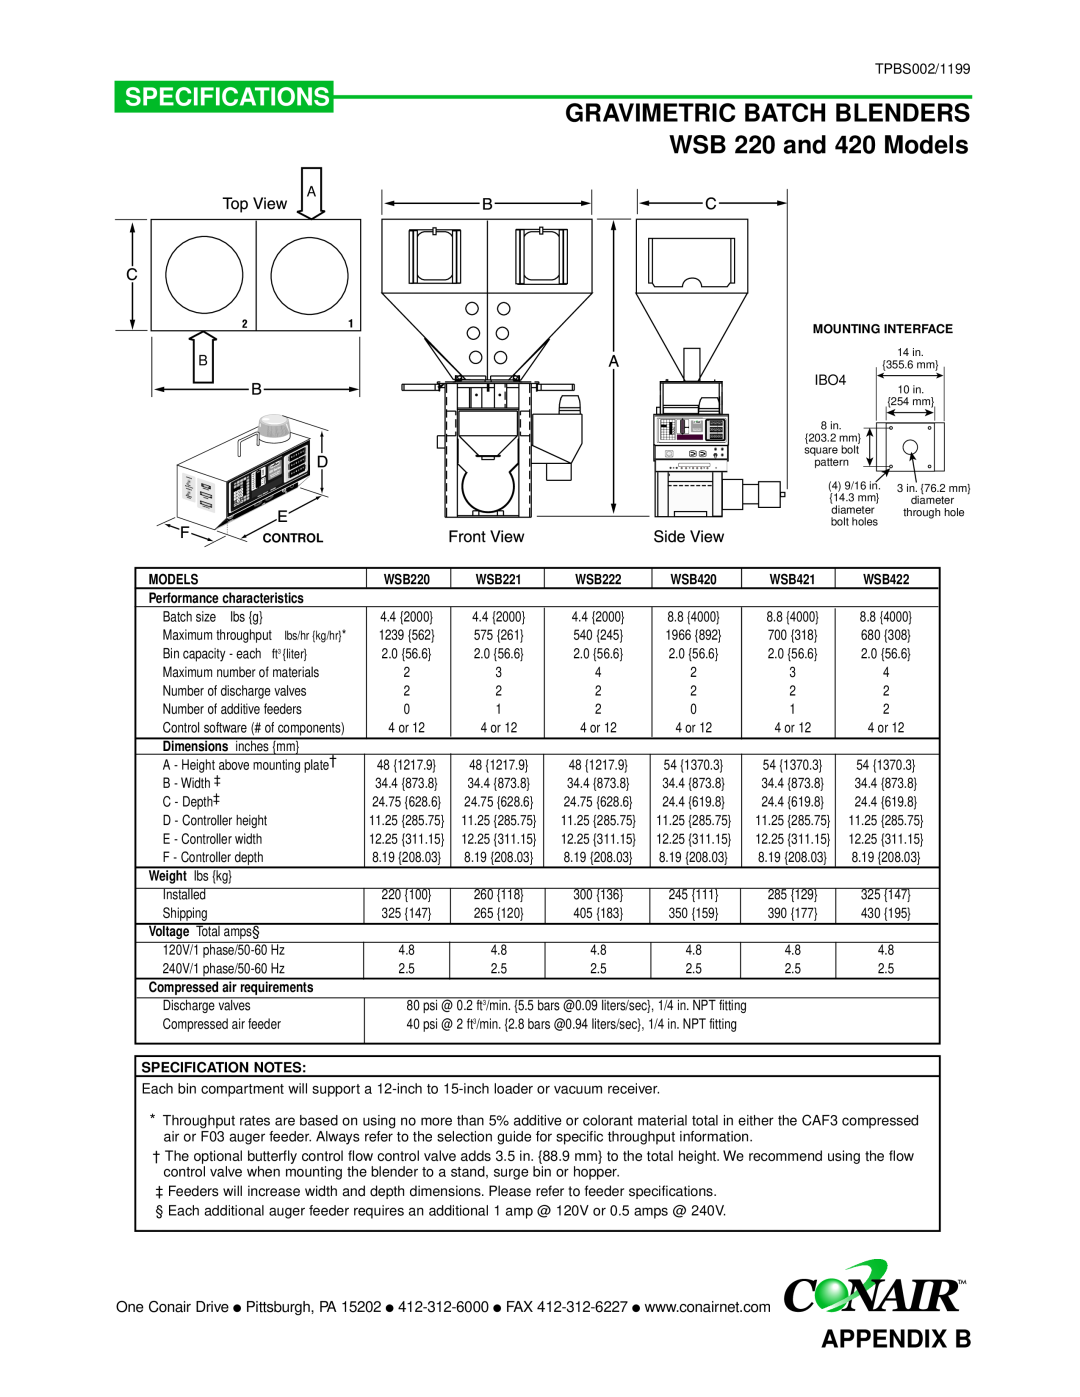 Conair GB/ WSB manual GRAVIMETRIC BATCH BLENDERS WSB 220 and 420 Models, Specifications, Appendix B 